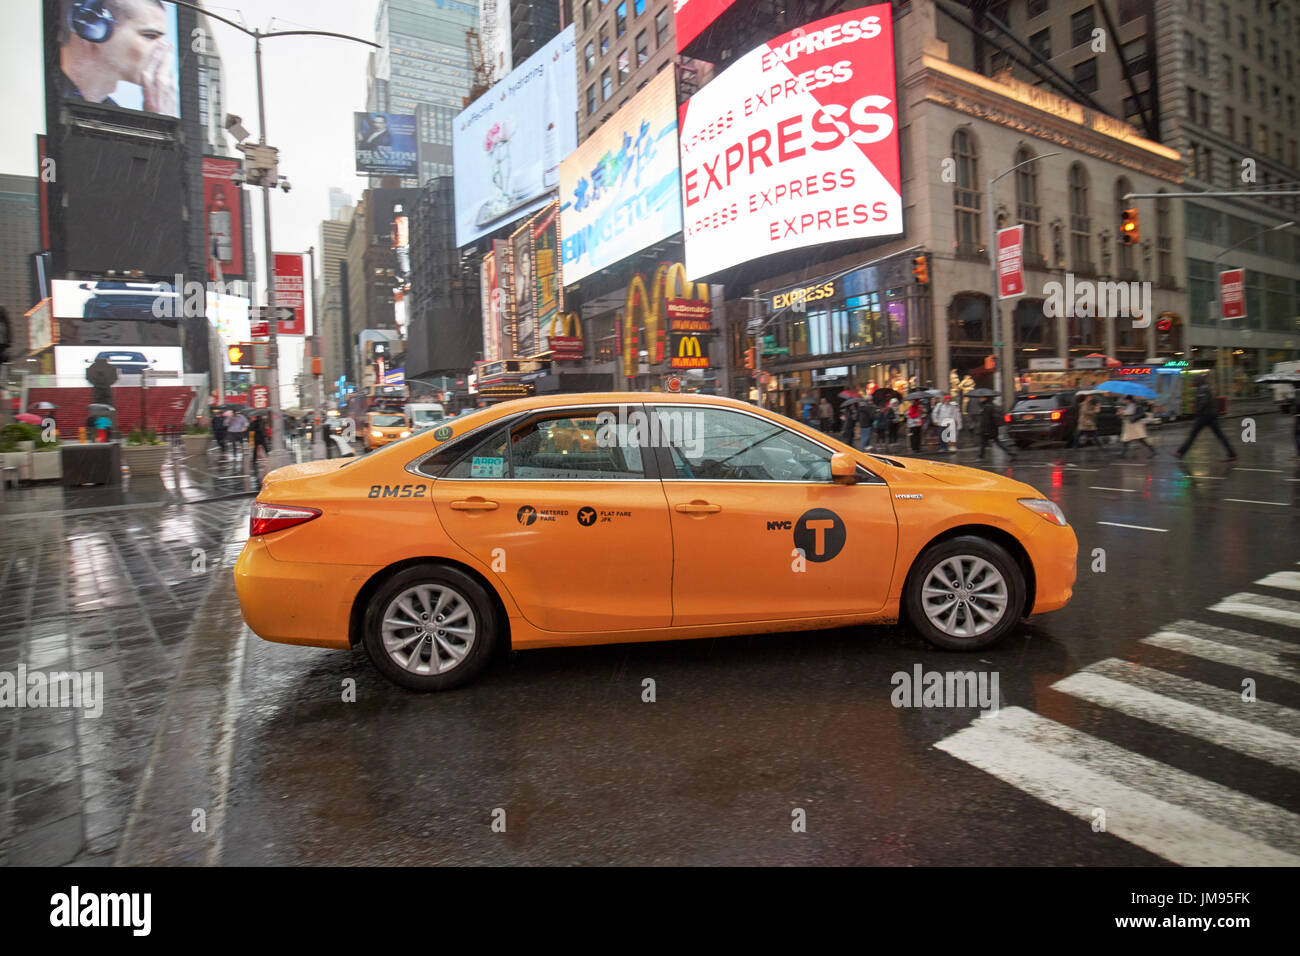 Toyota Camry Hybrid New York gelbes Taxi Cab überqueren Times Square in New York City USA Regen Stockfoto